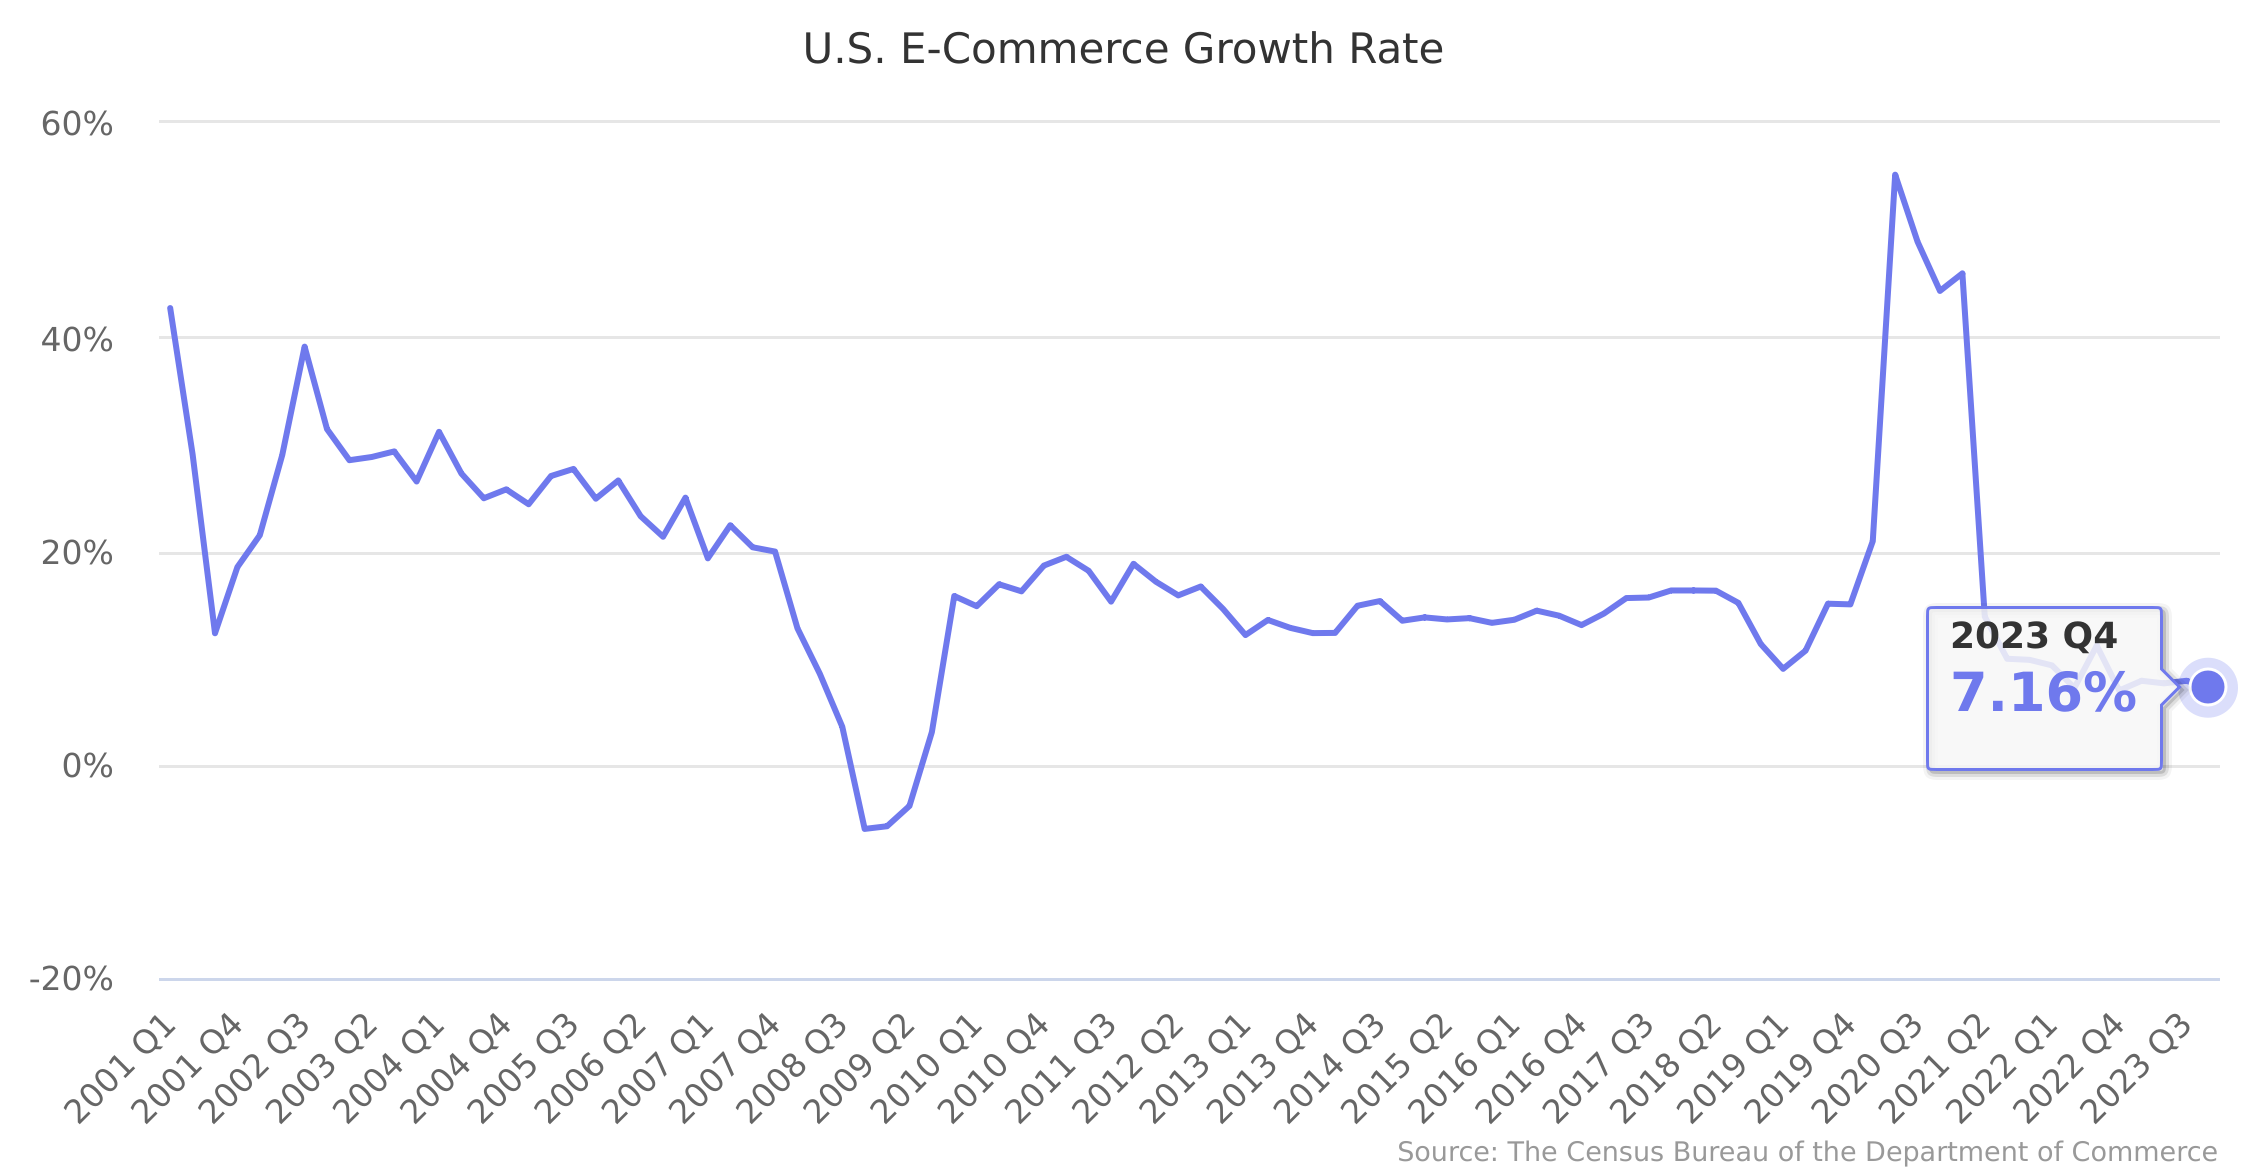 U.S. E-Commerce Growth Rate 2001-2022